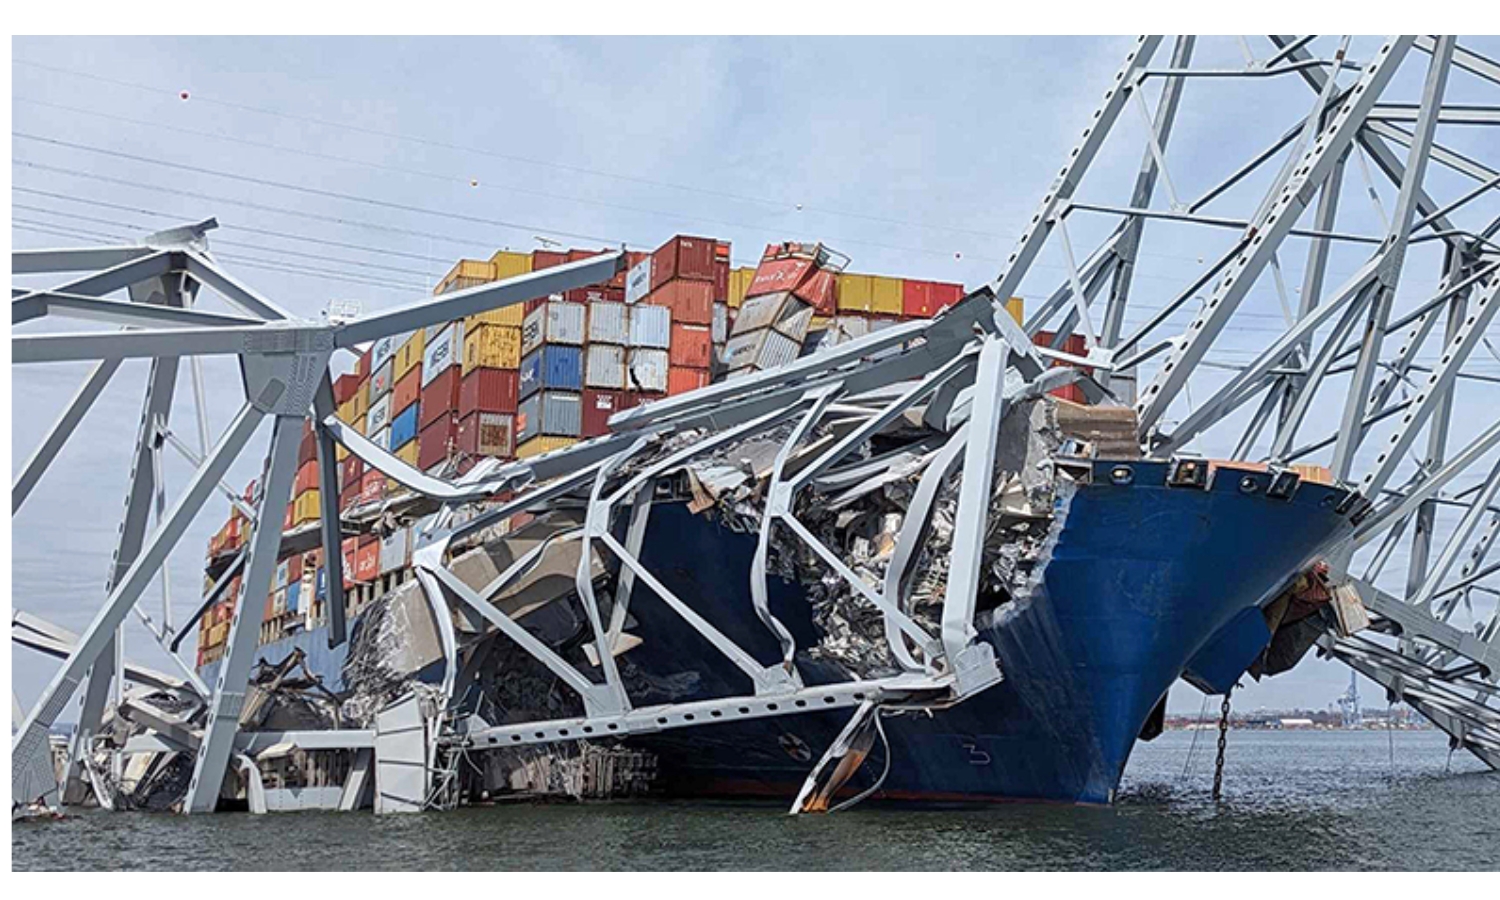 Bridge Collapse in Baltimore: Insurers Facing Billions in Costs